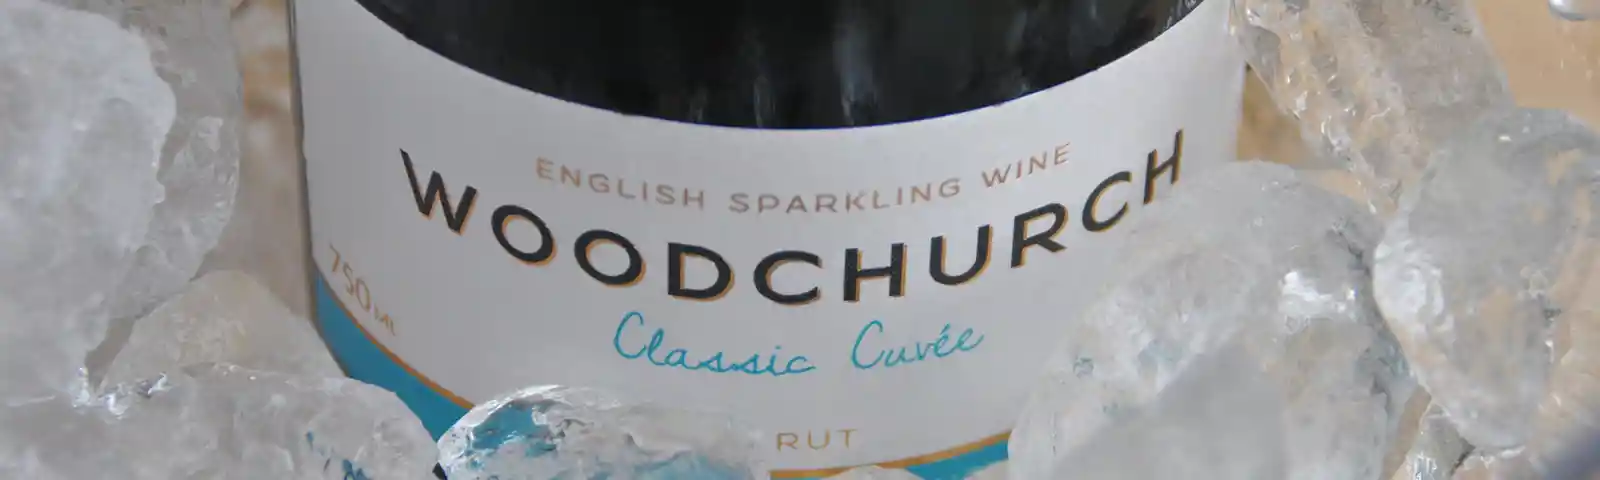 Woodchurch Wines bottle